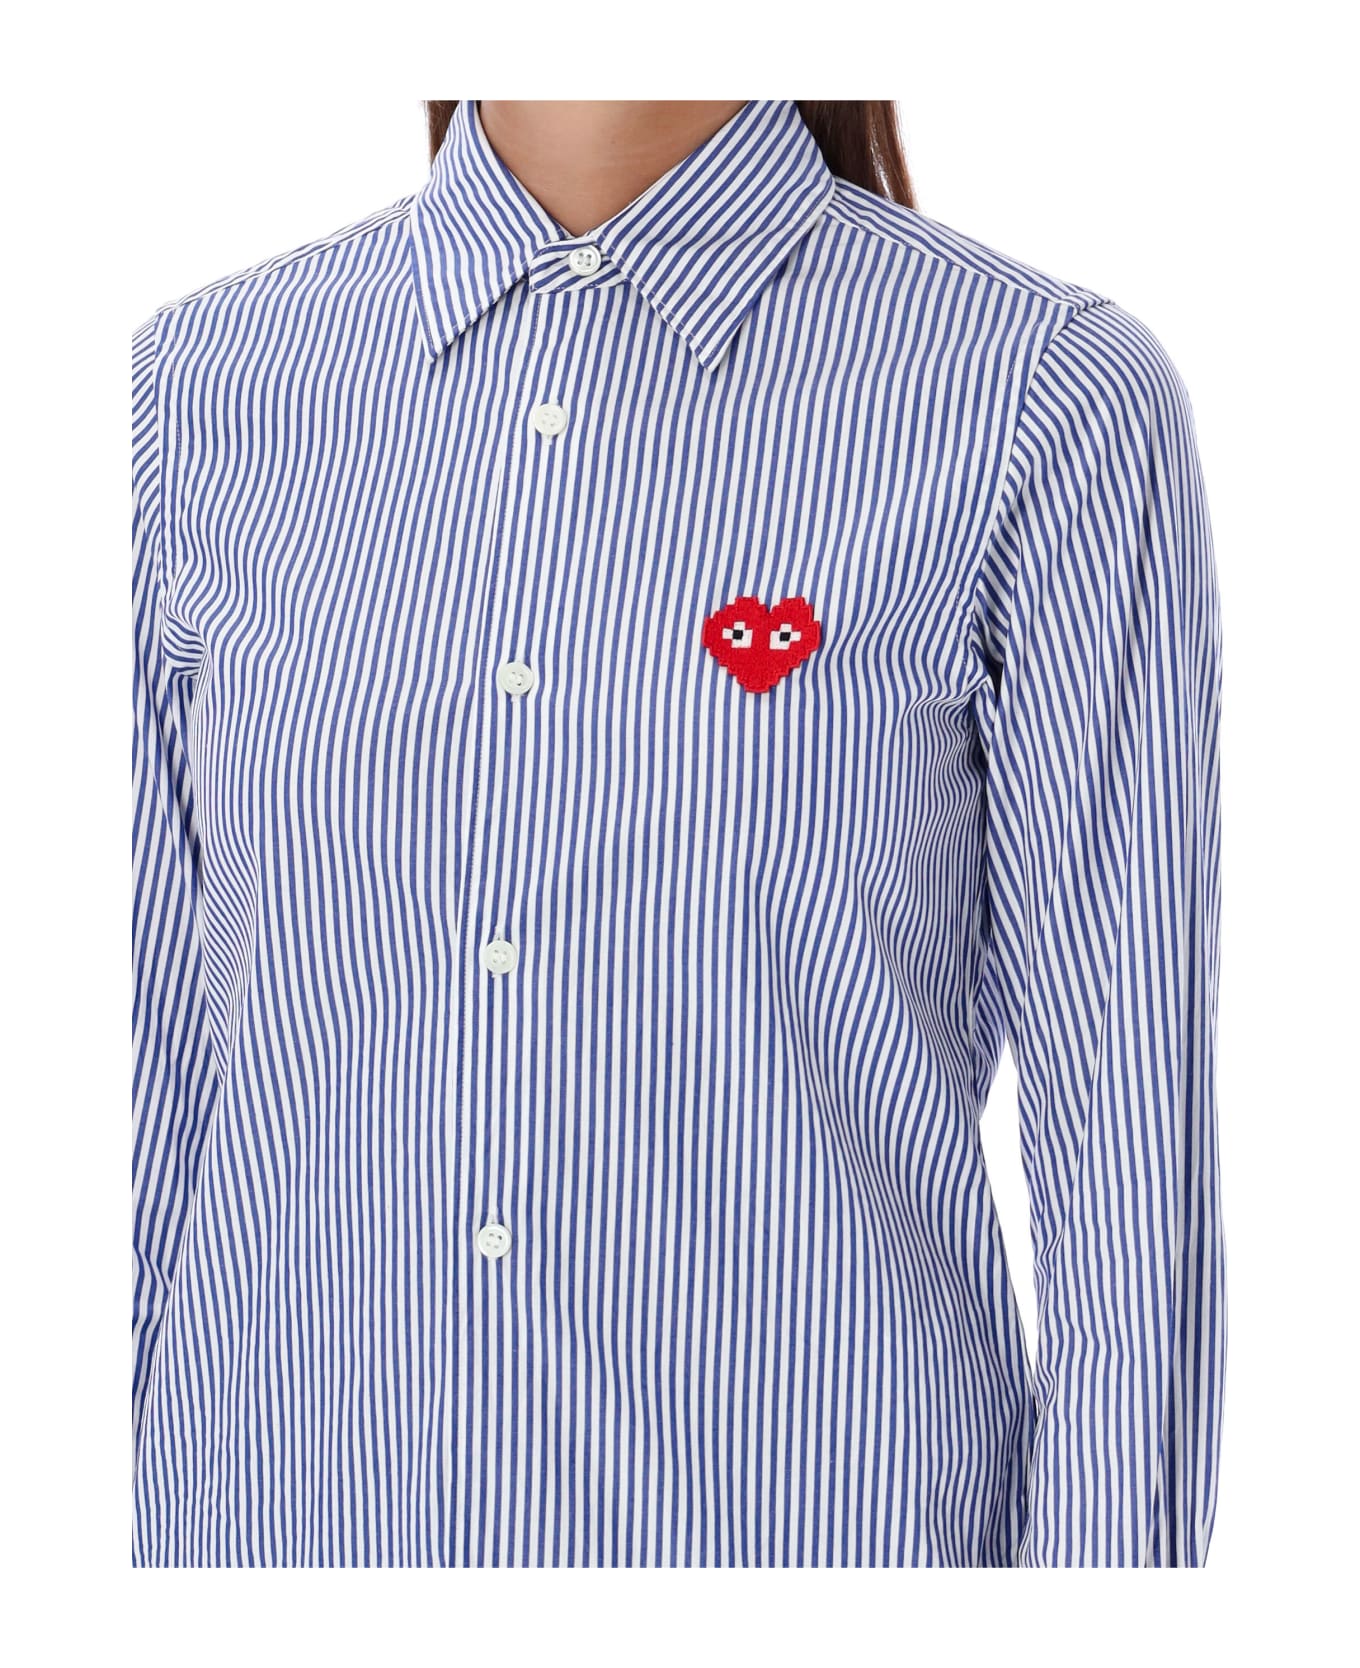 Comme des Garçons Play Pixel Red Heart Shirt - BLUE/WHITE STRIPES